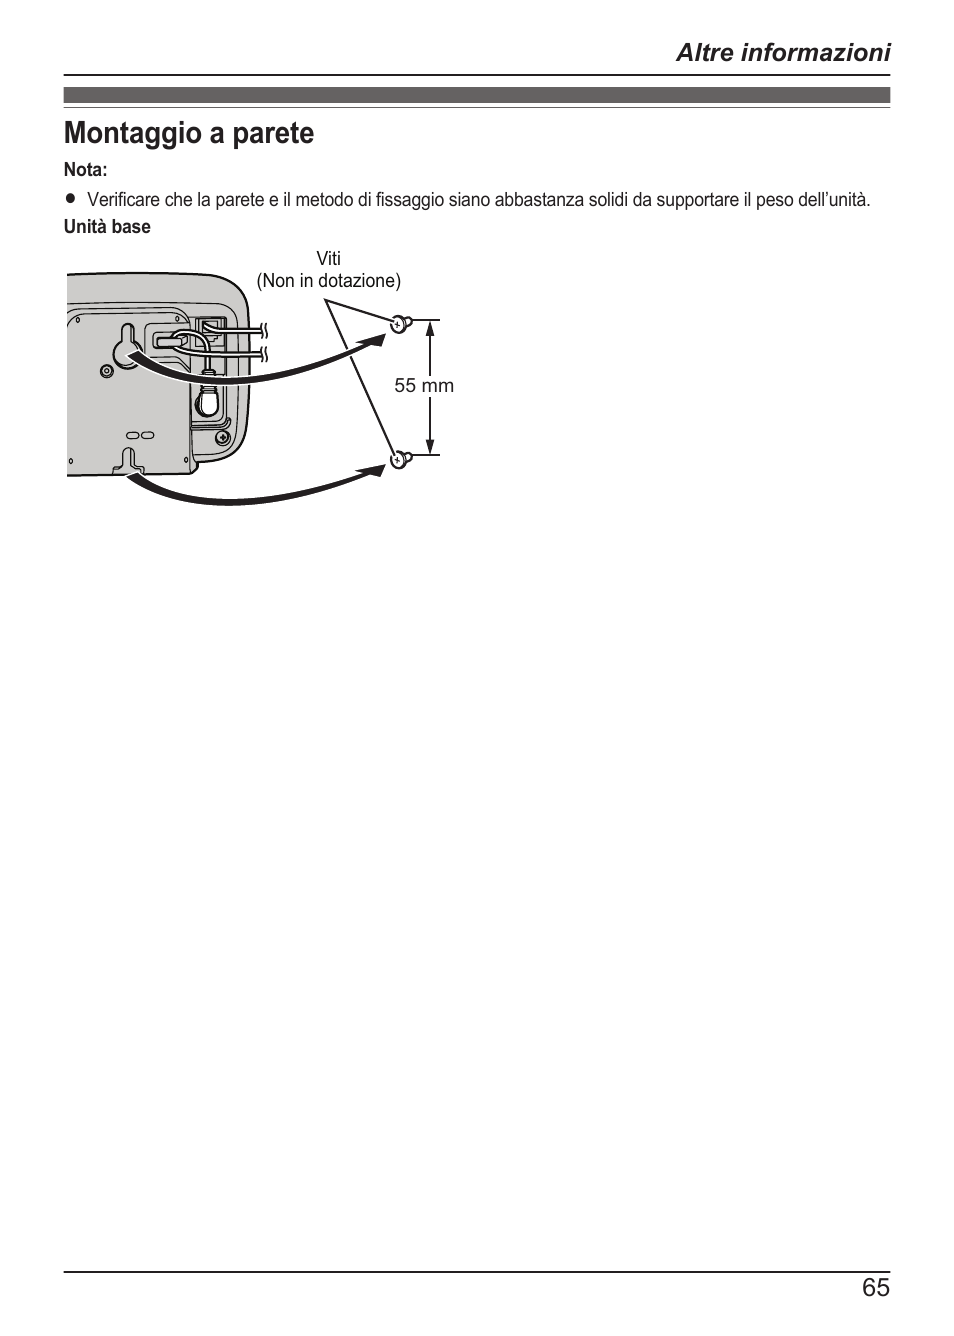 Montaggio a parete | Panasonic KXPRX120SL Manuale d'uso | Pagina 65 / 68